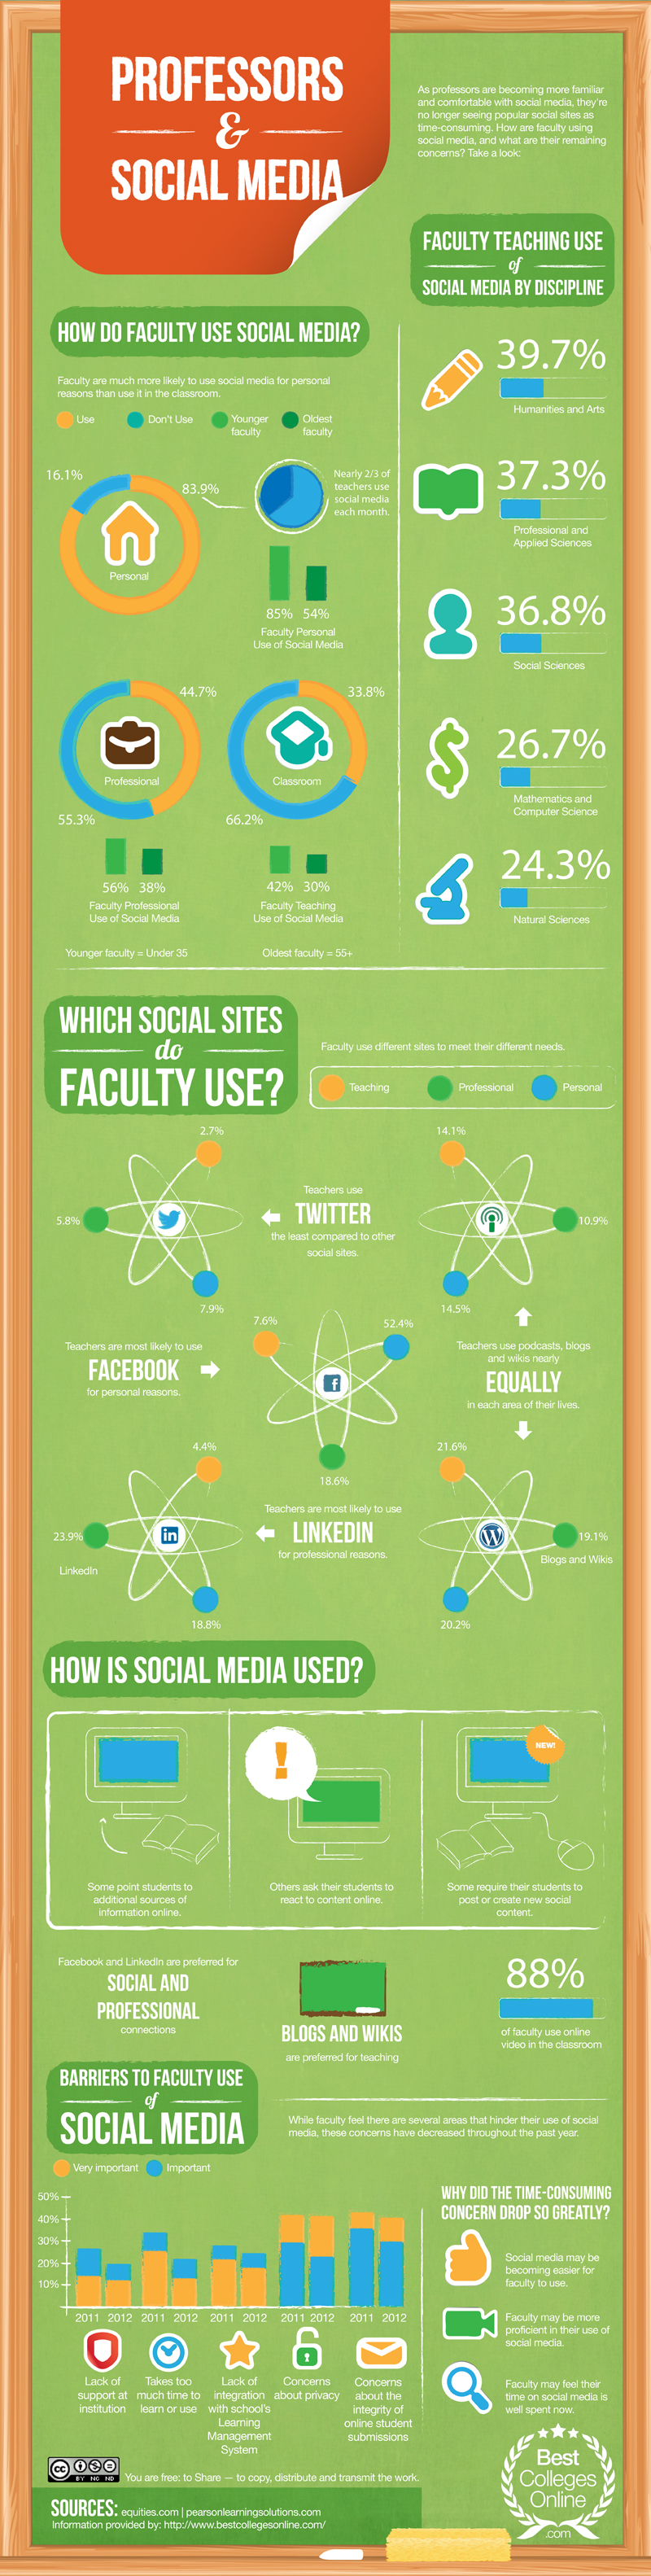 social media usage infographic 